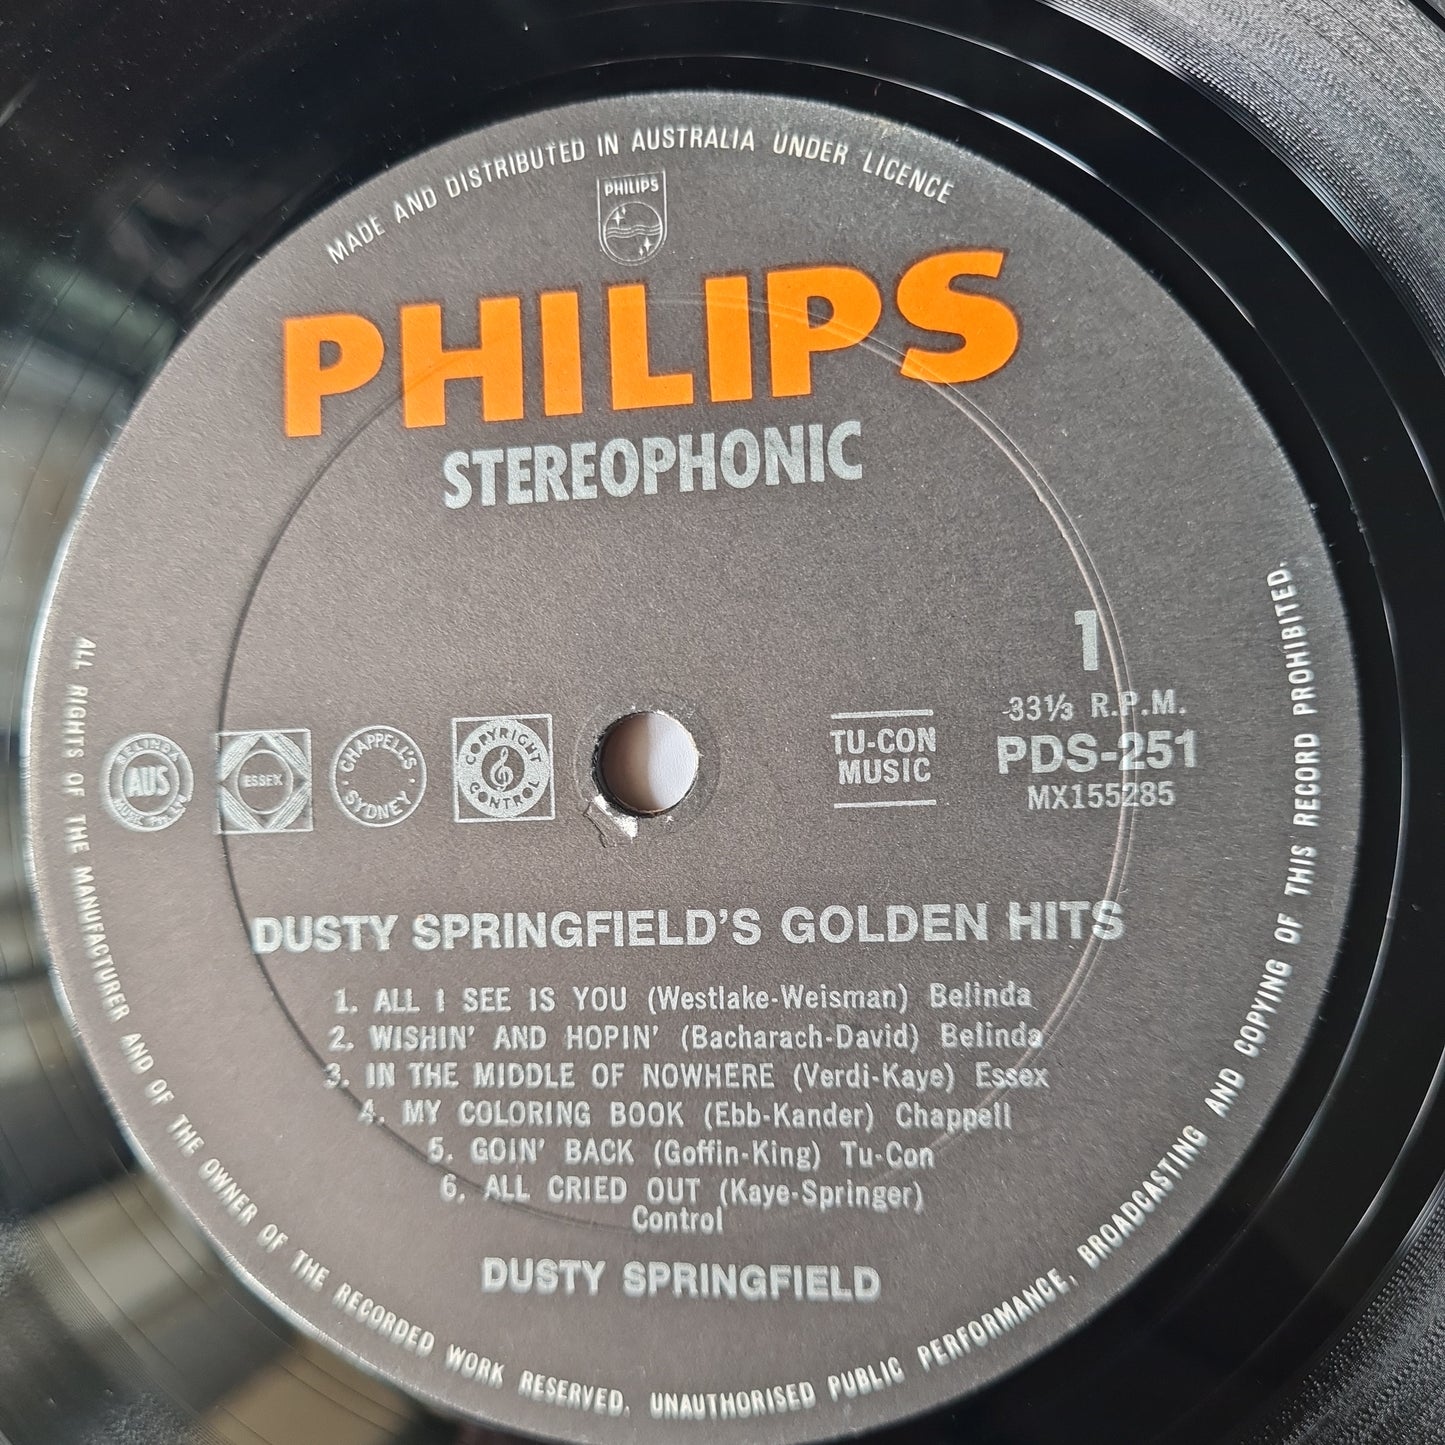 Dusty Springfield – Dusty Springfield's Golden Hits - 1968 - Vinyl Record